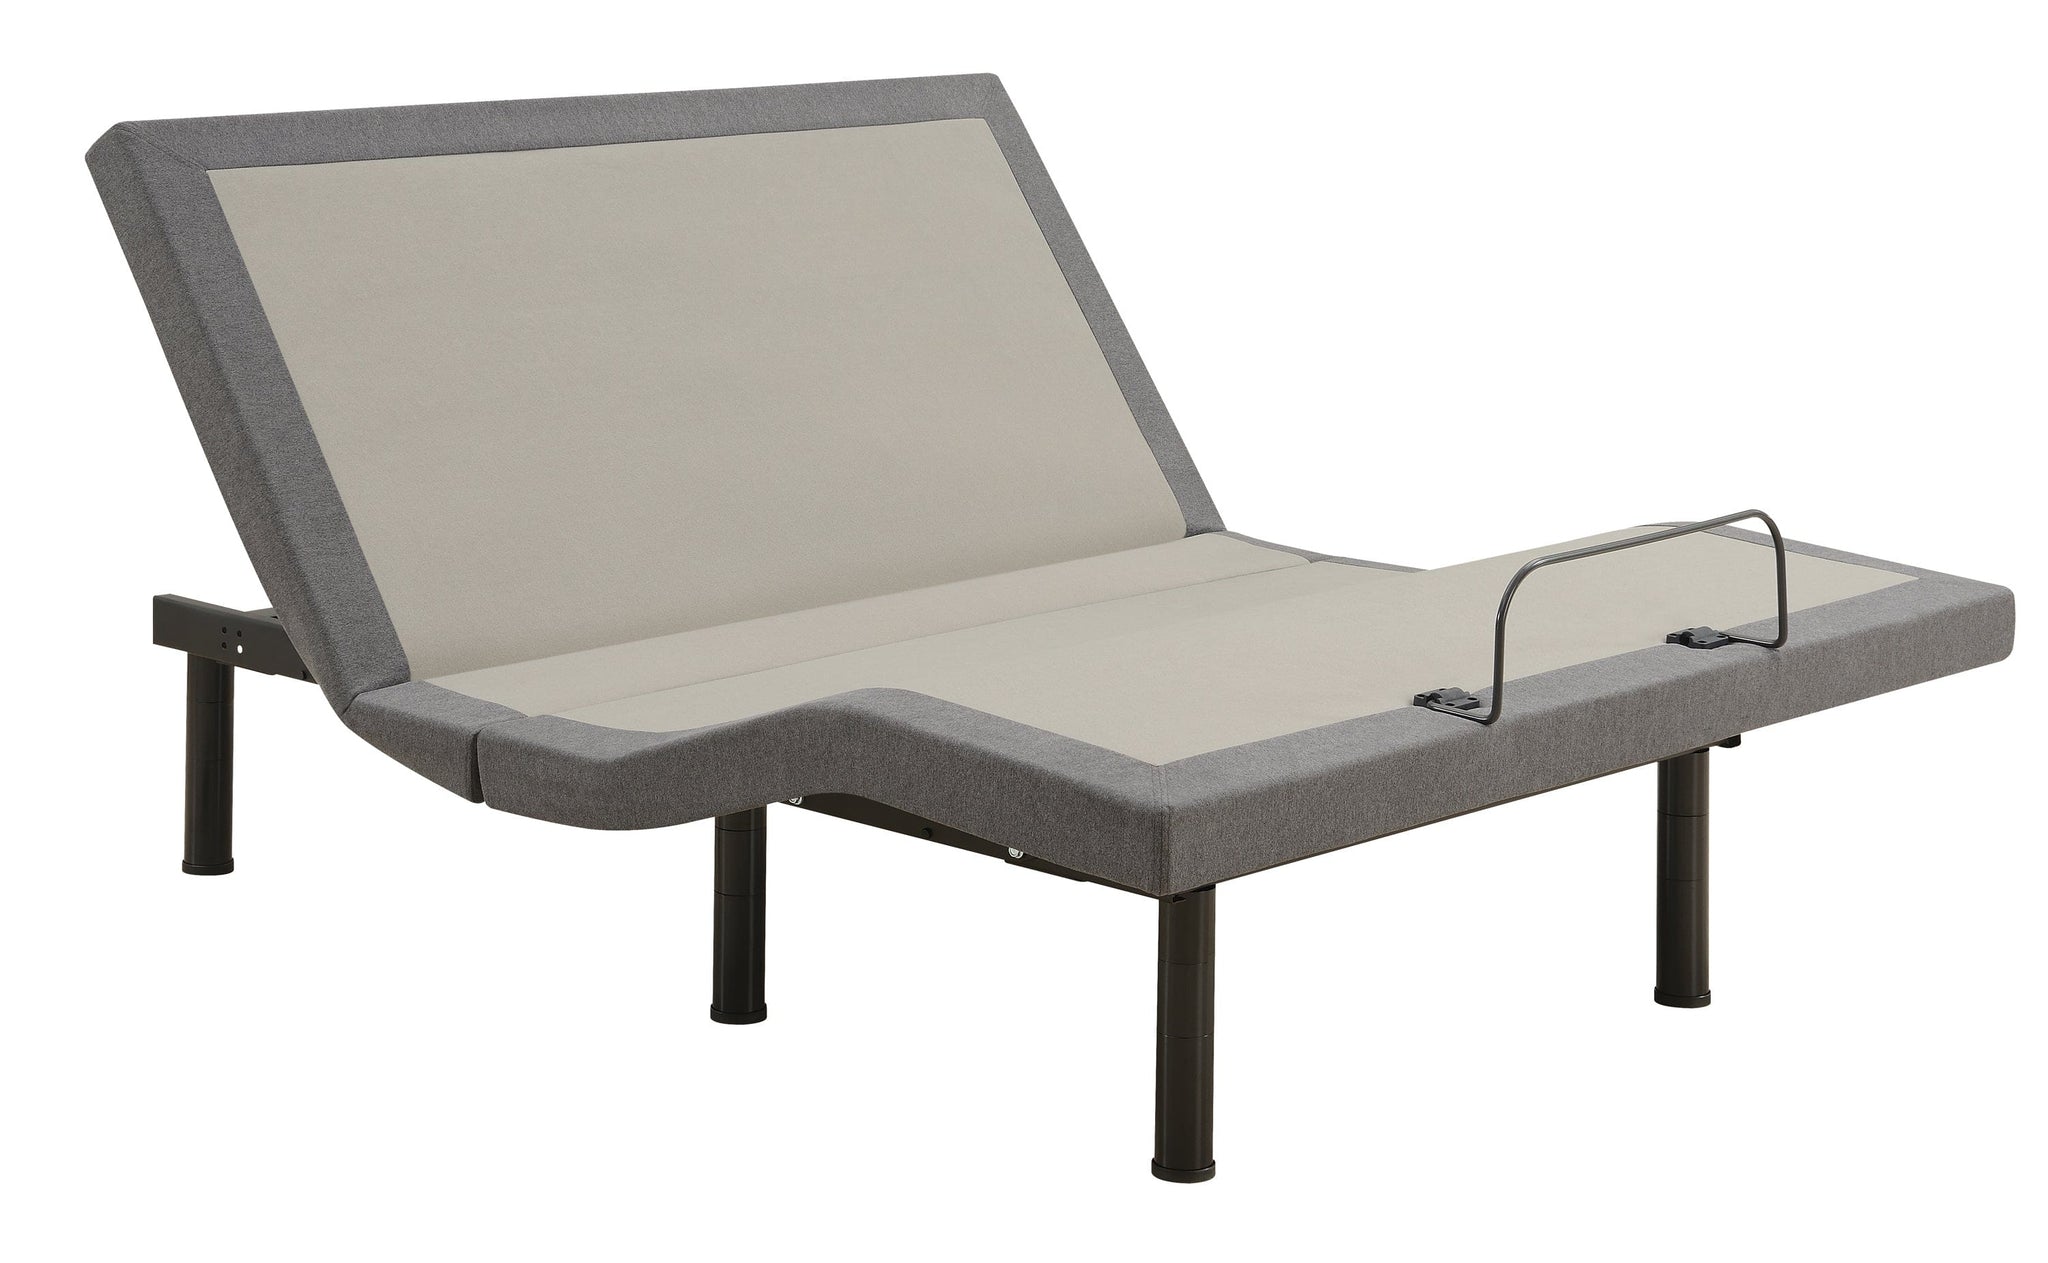 Negan Full Adjustable Bed Base Grey And Black - 350132F